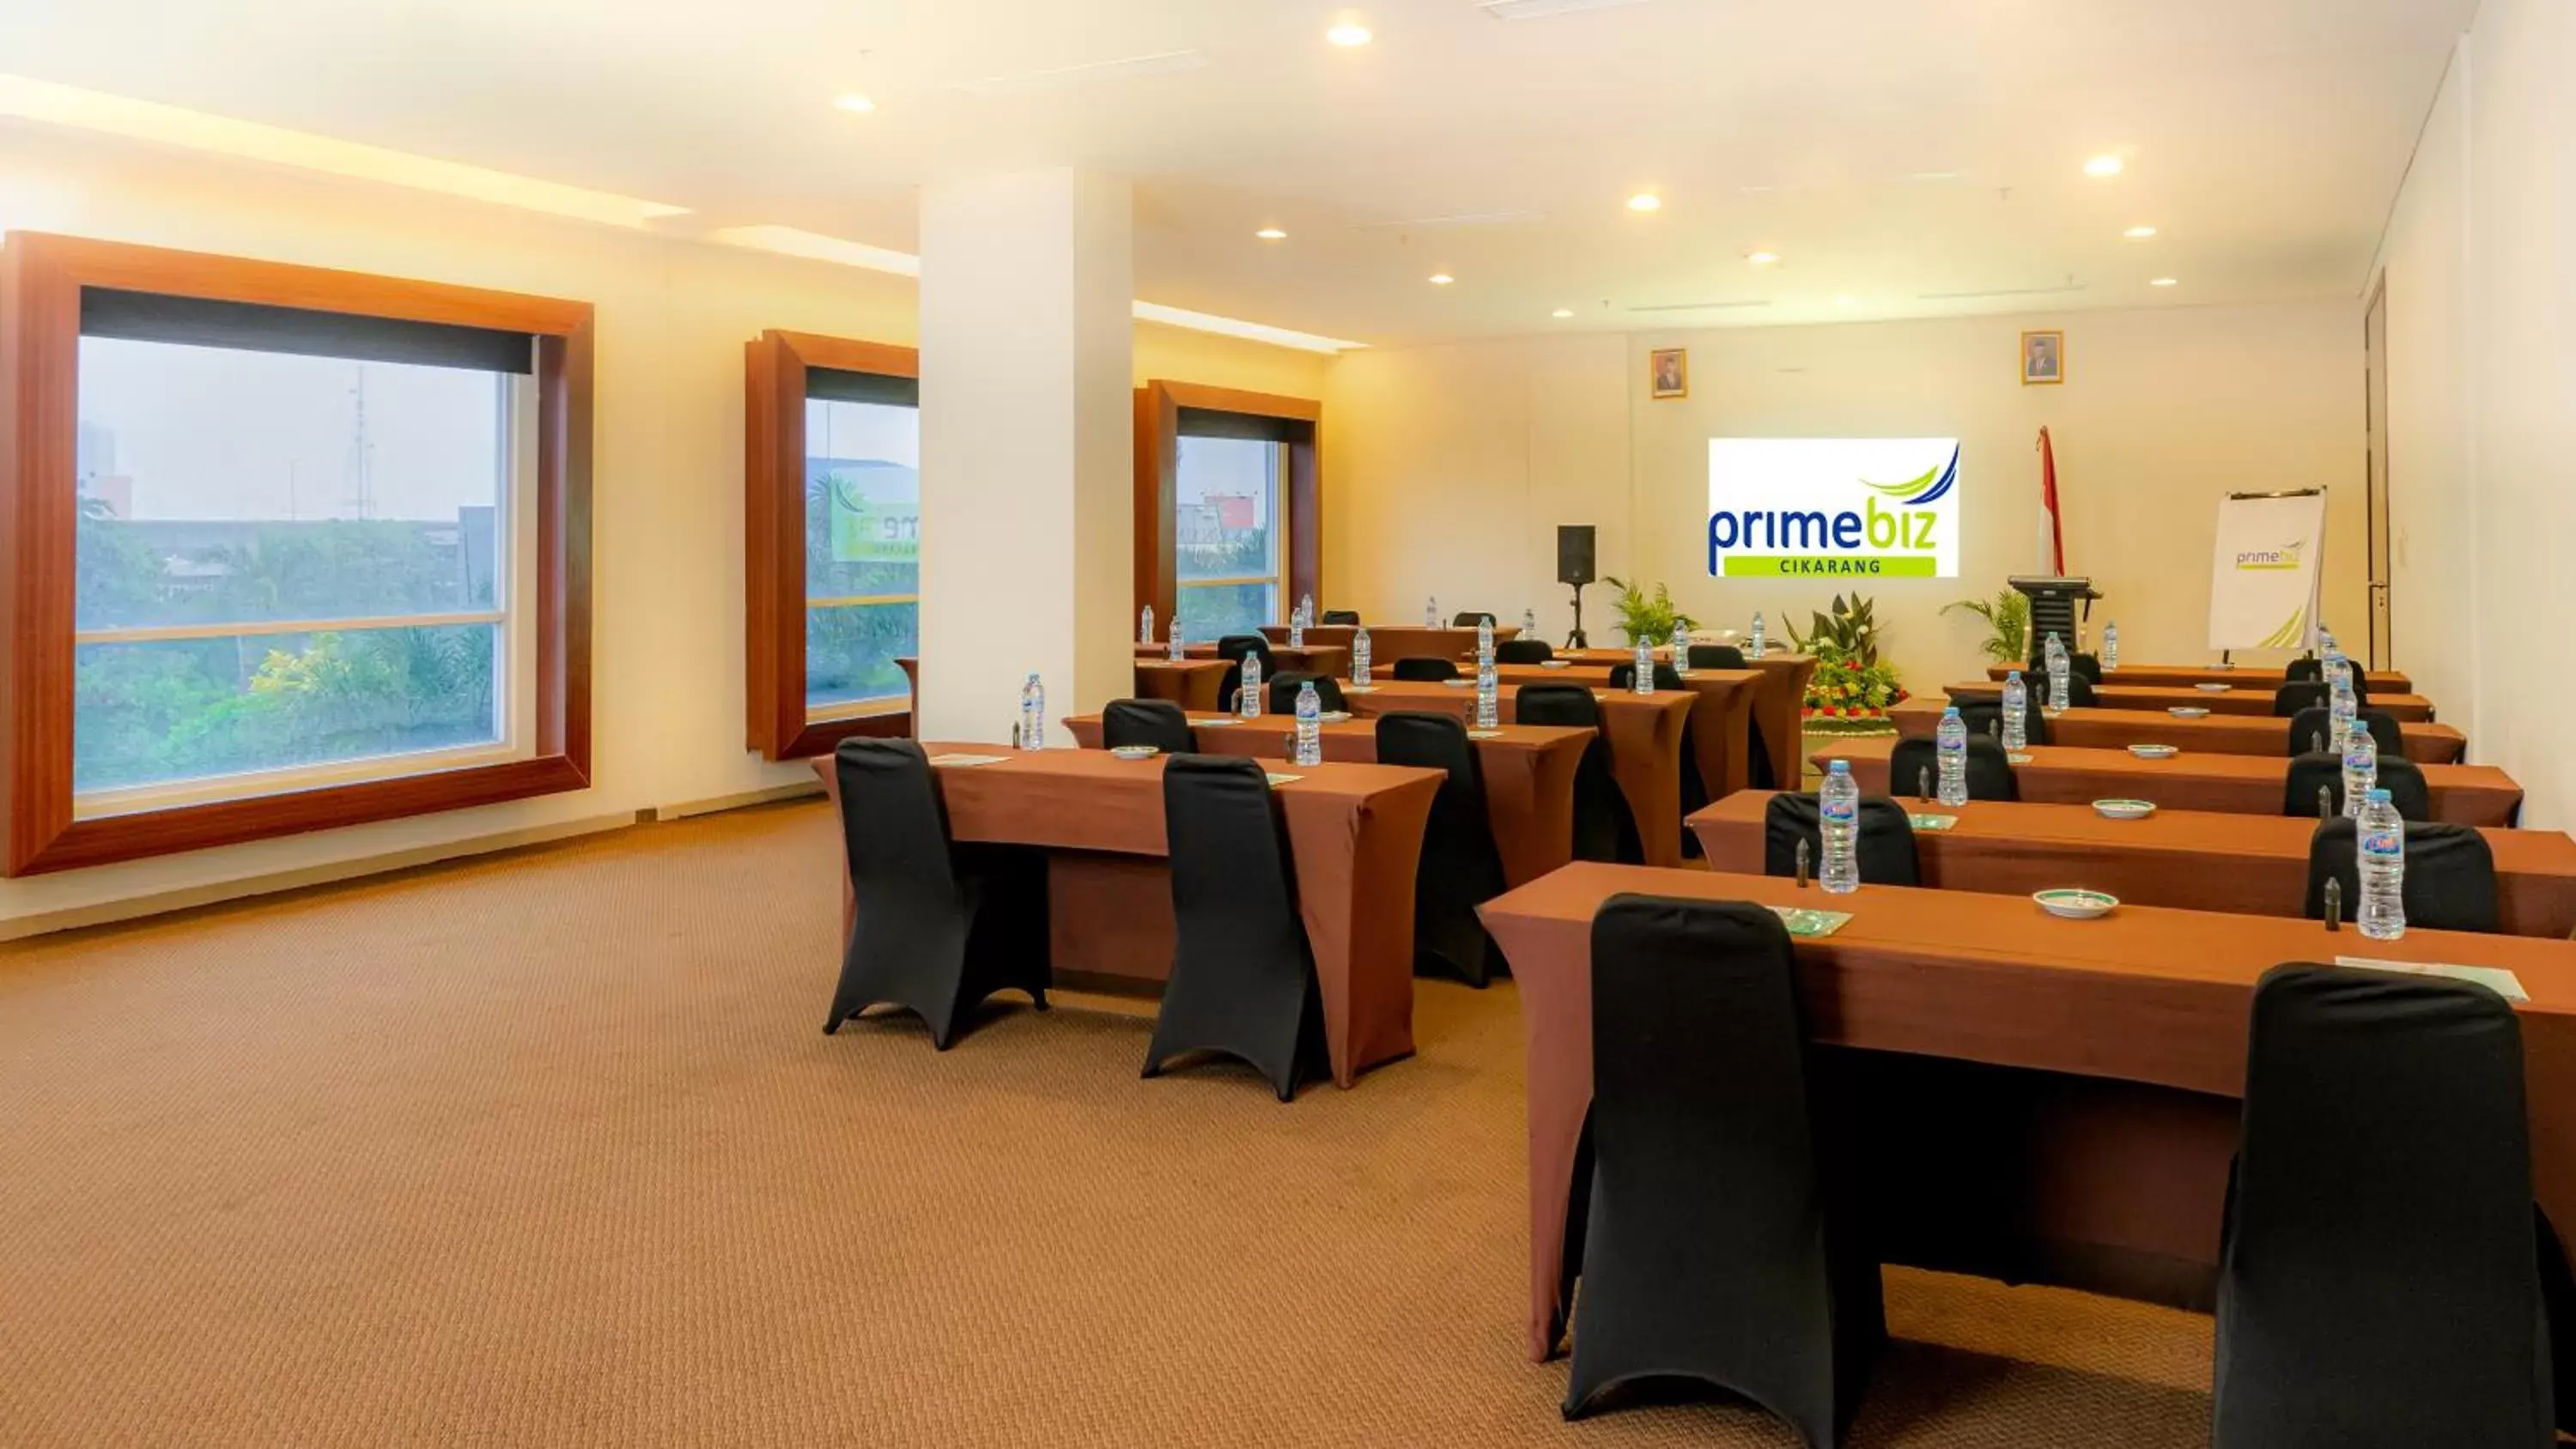 Meeting/conference room in PrimeBiz Cikarang